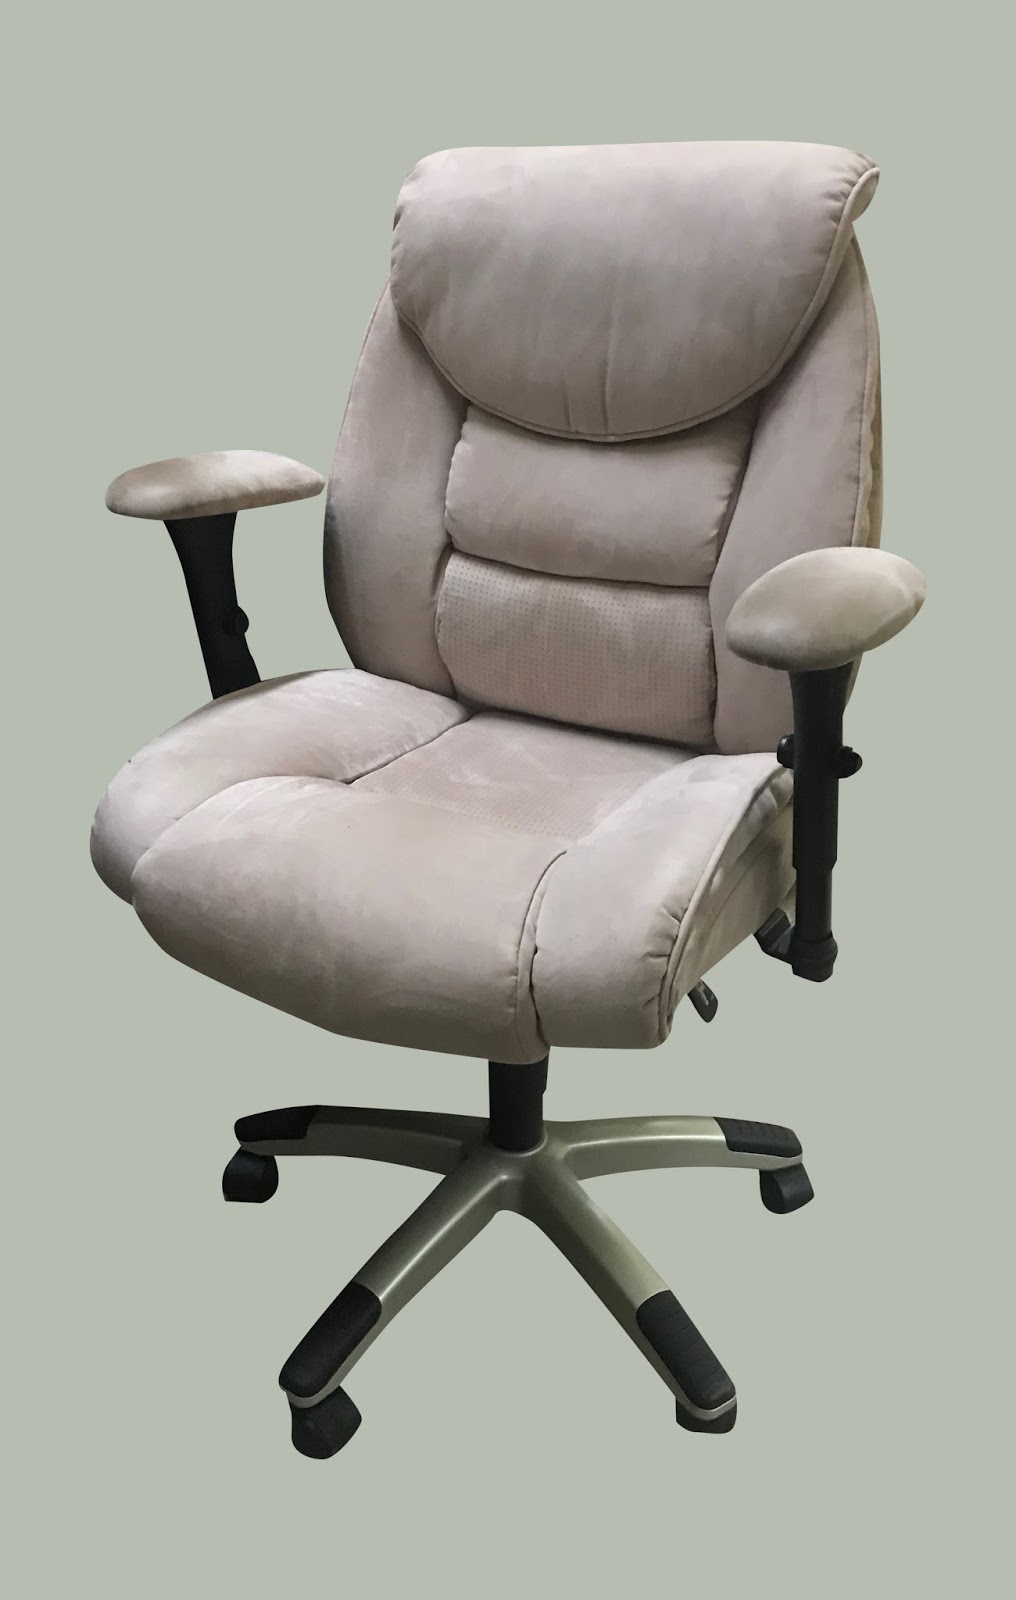 Uhuru Furniture & Collectibles: Beige Microfiber Office Chair - $45 $35